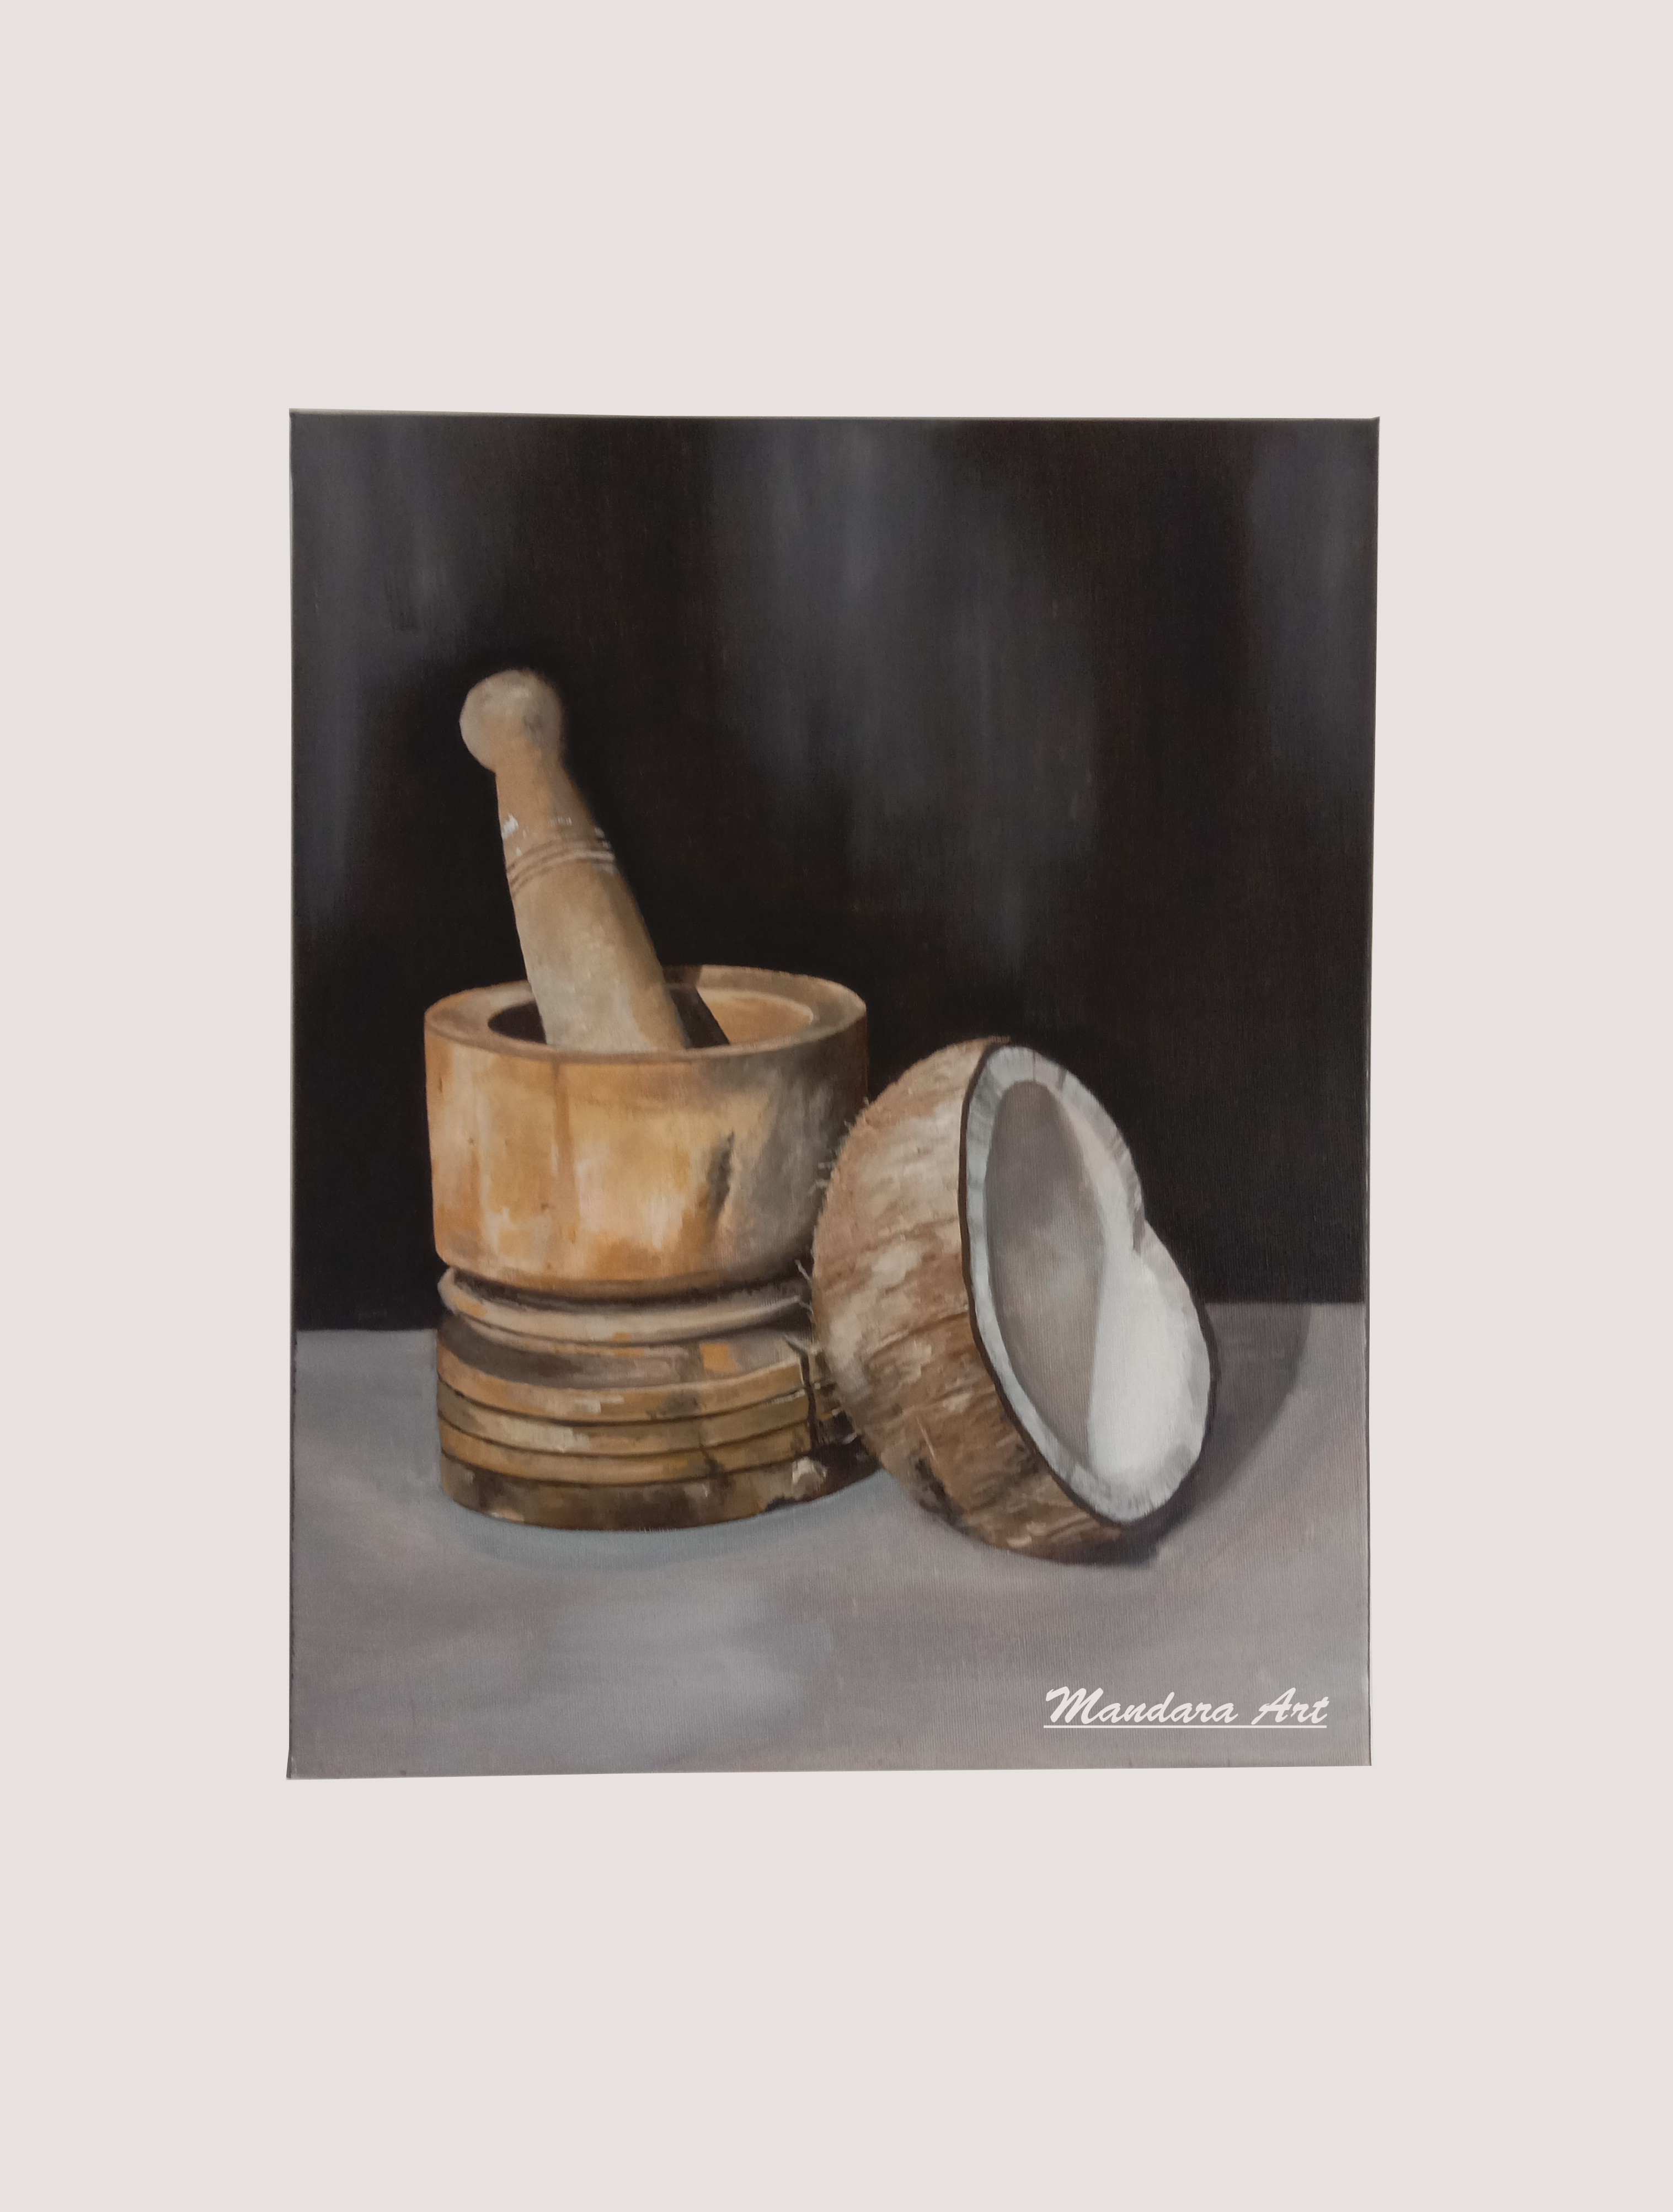 Coconut and mortar - Still Life by Sadeera Mandara